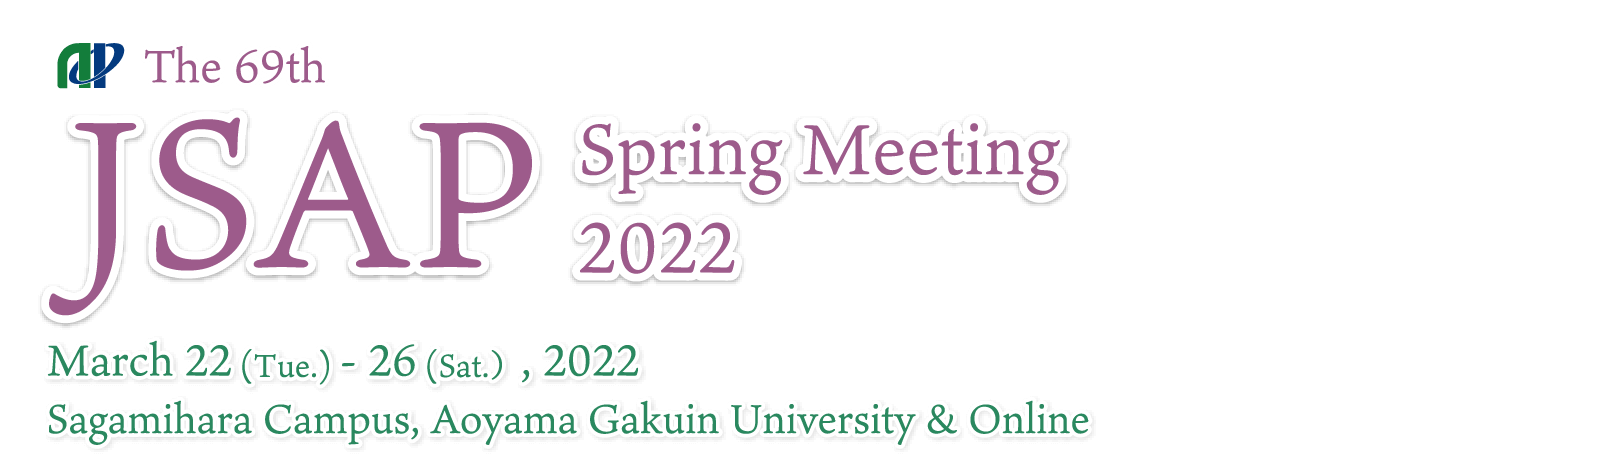 The 69th JSAP Spring Meeting 2022